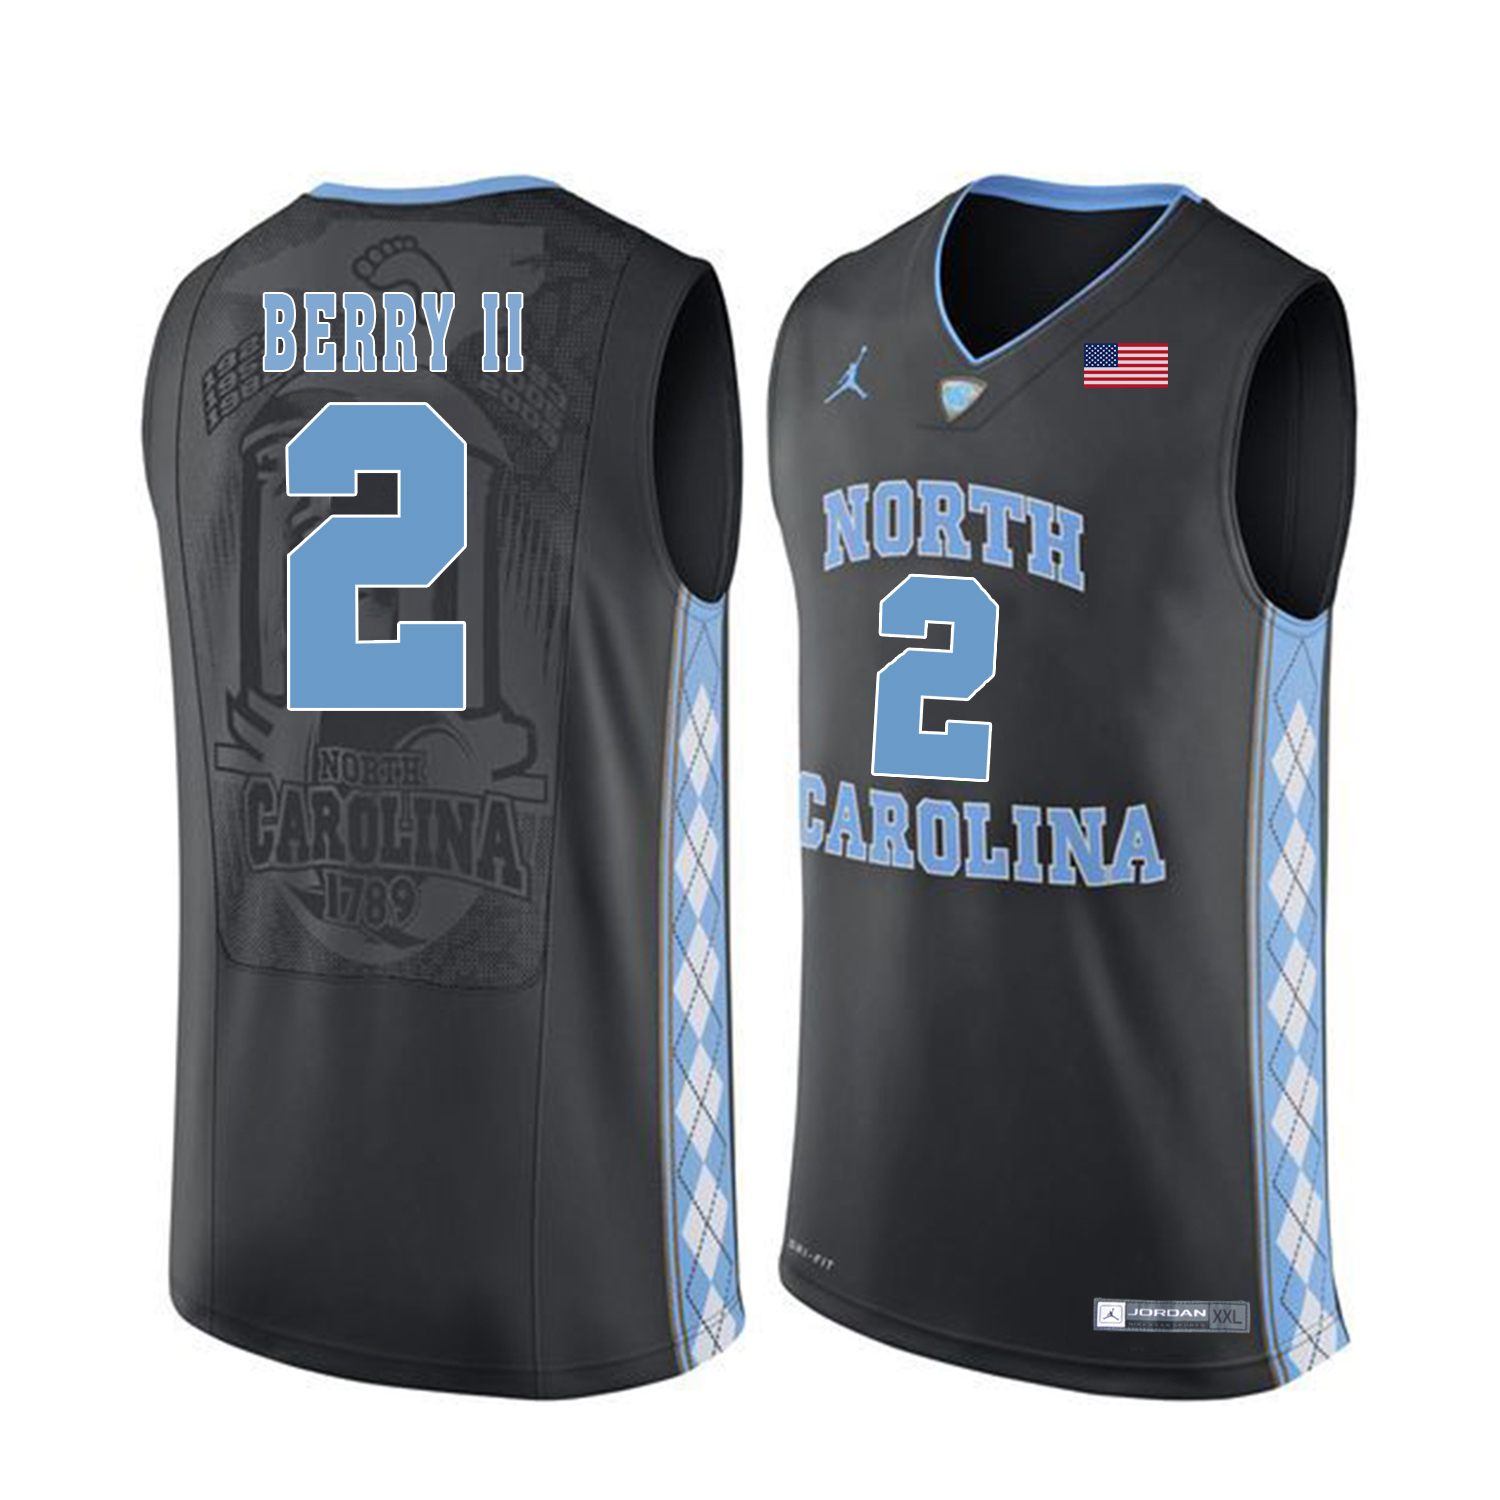 North Carolina Tar Heels 2 Joel Berry II Black College Basketball Jersey